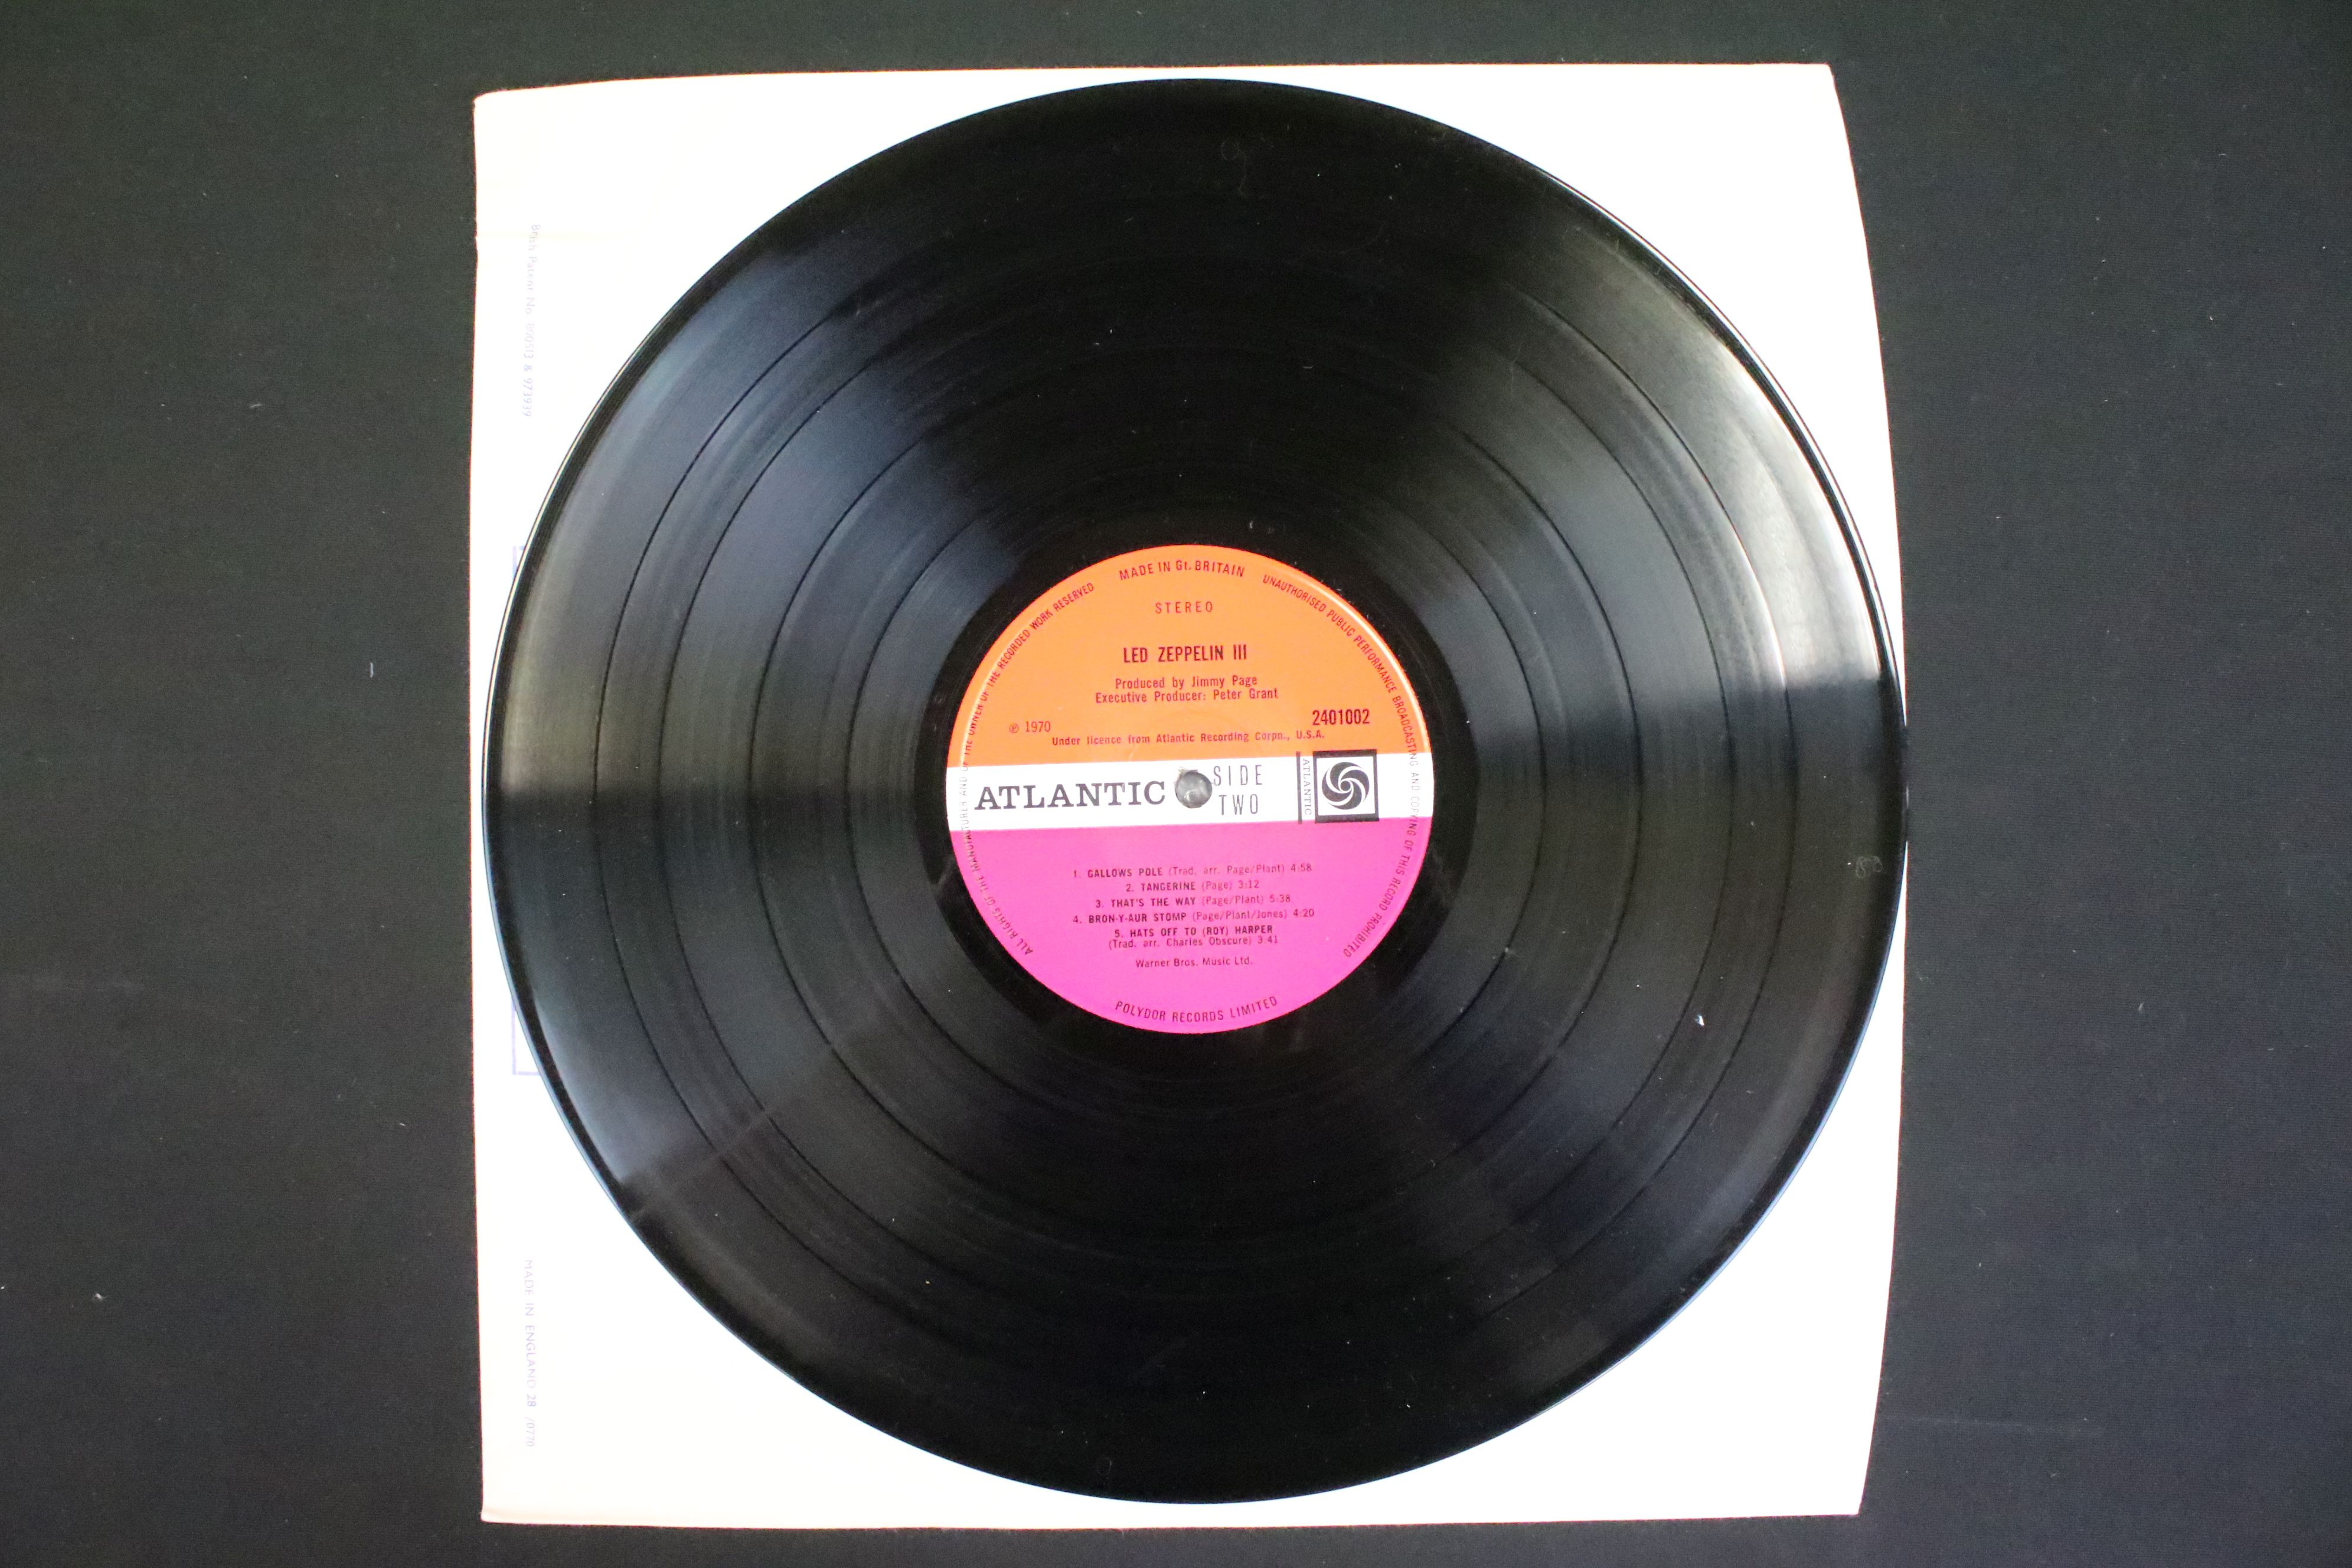 Vinyl - Led Zeppelin III original plum Atlantic labels, A5/B5 matrices, Peter Grant credit, fully - Image 6 of 7